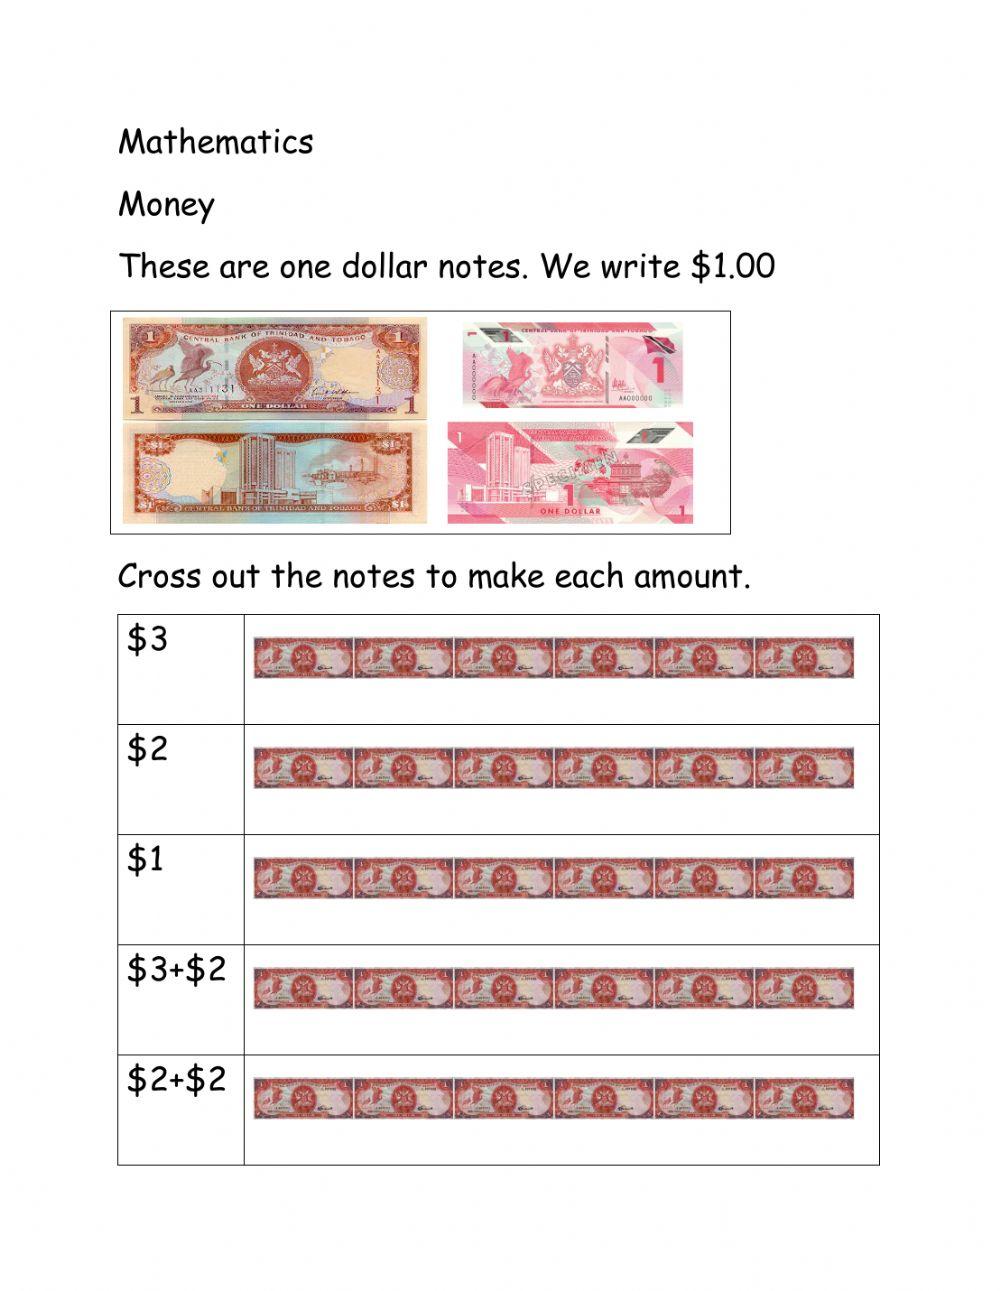 Mathematics Money